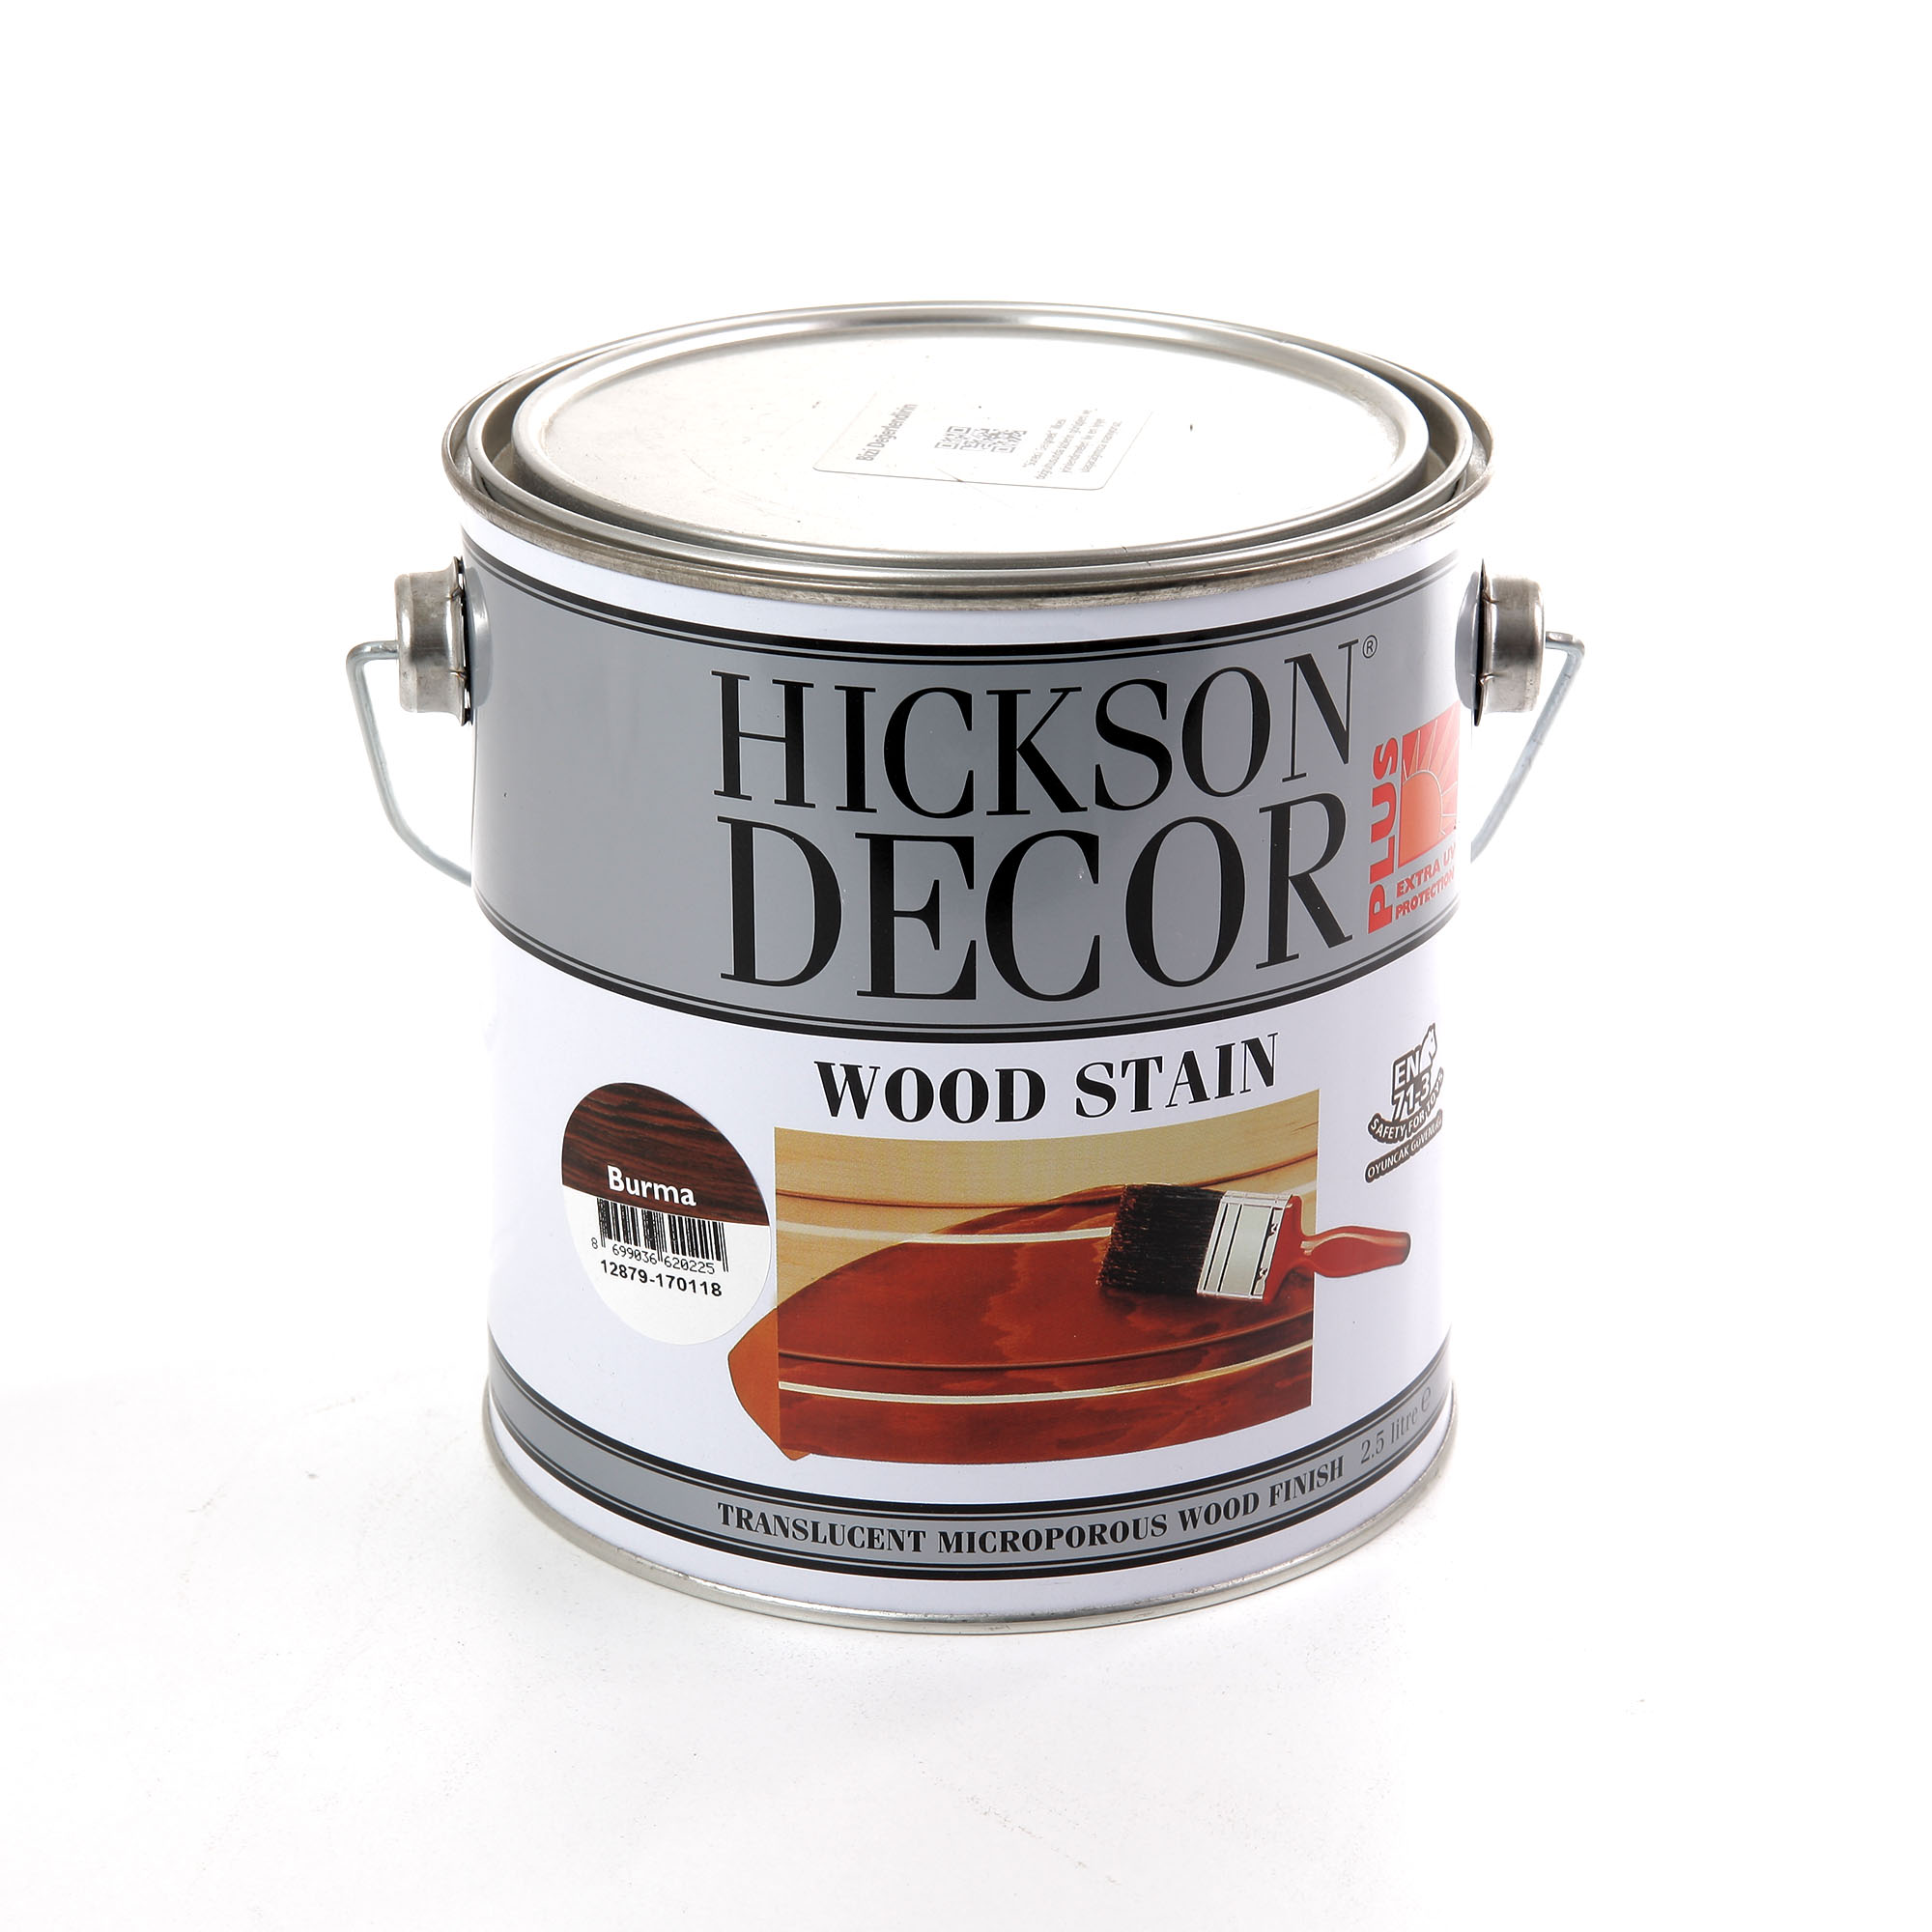 Hickson Decor wood stain 5 lt